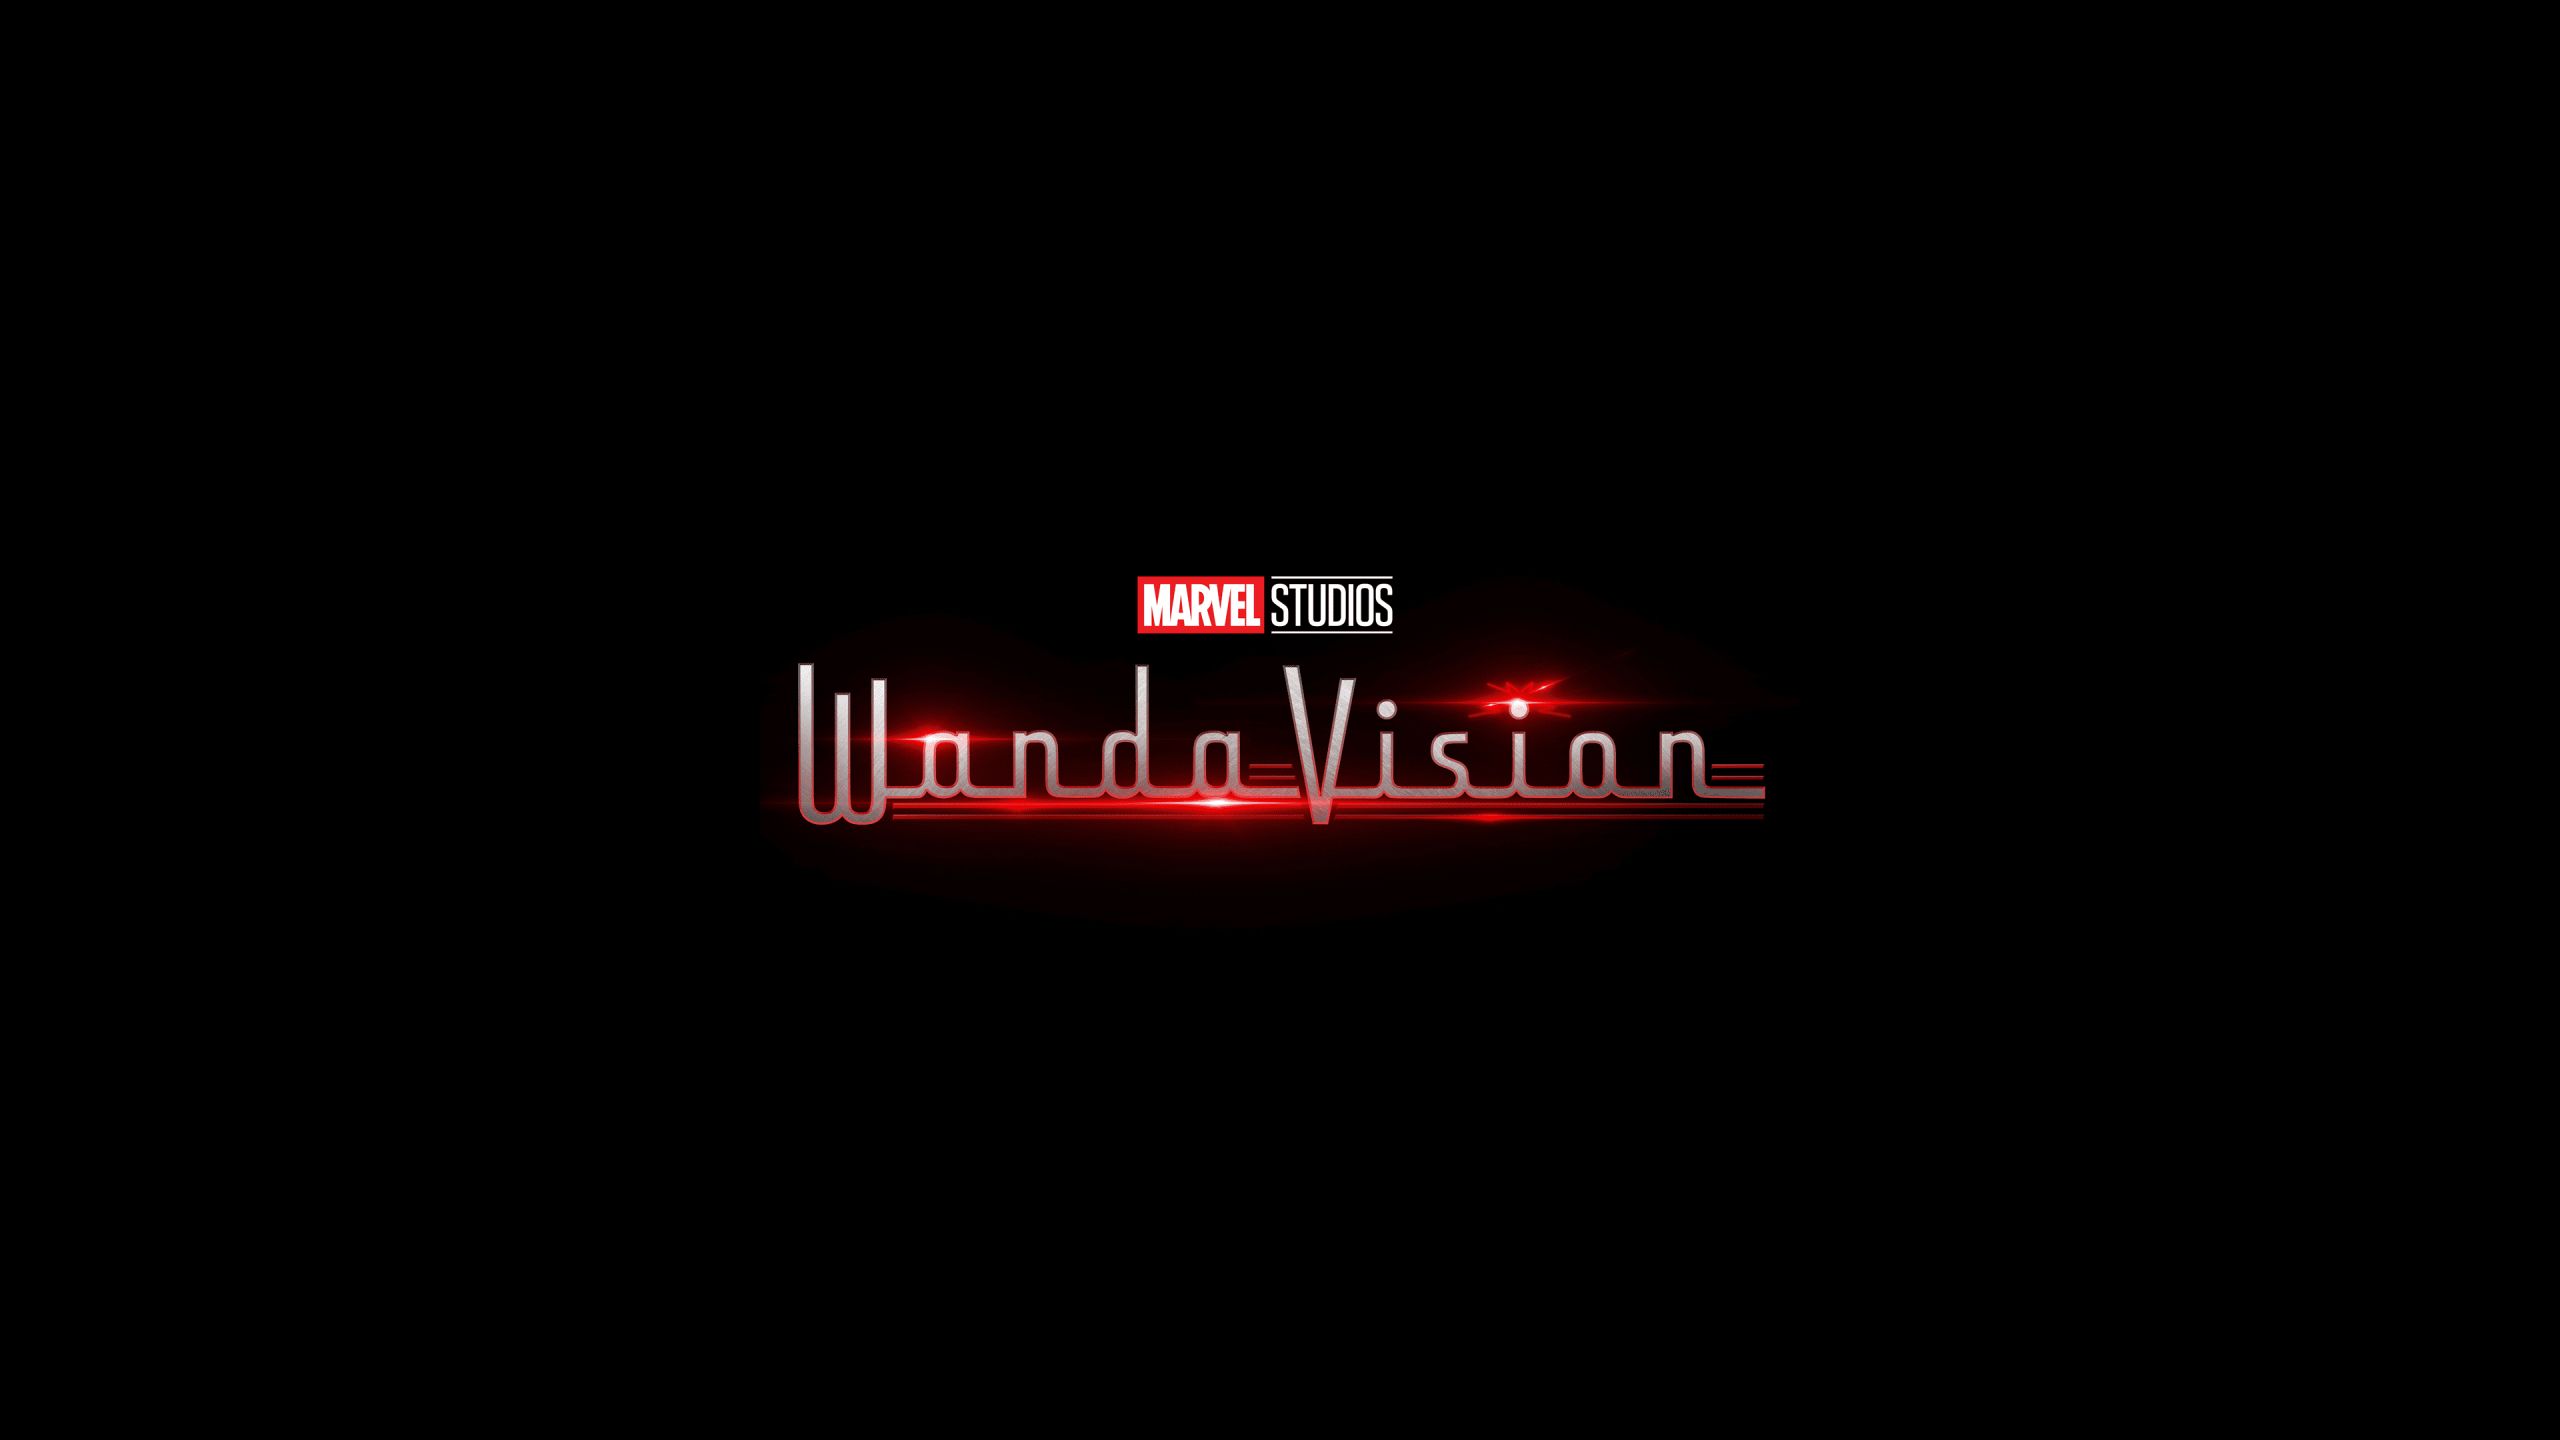 Marvels Wanda Vision Comic Con 1440P Resolution Wallpaper, HD TV Series 4K Wallpaper, Image, Photo and Background